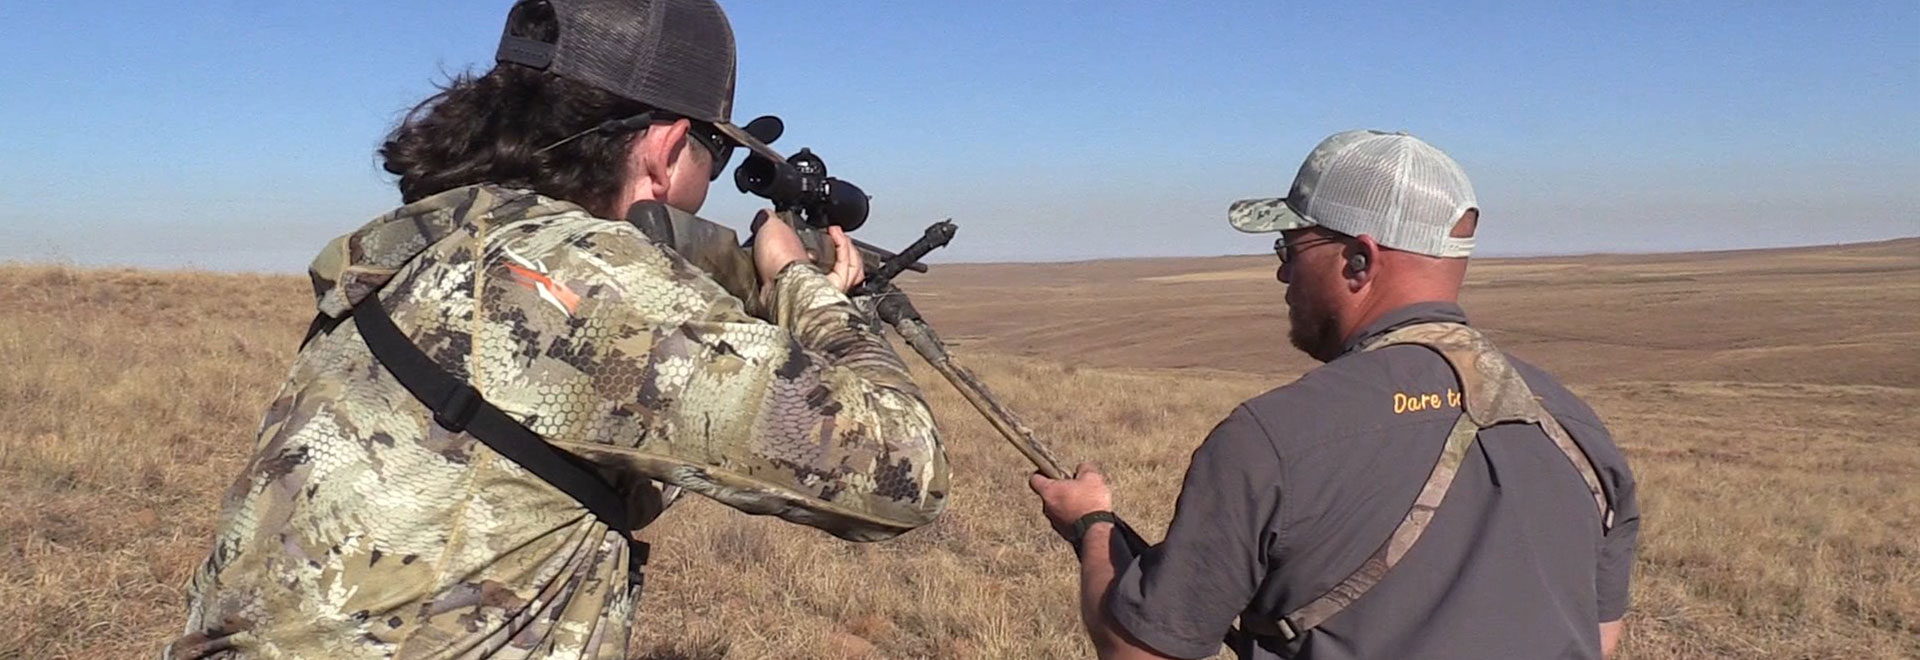 Plains Game Rifle Hunting with Likhulu Safaris